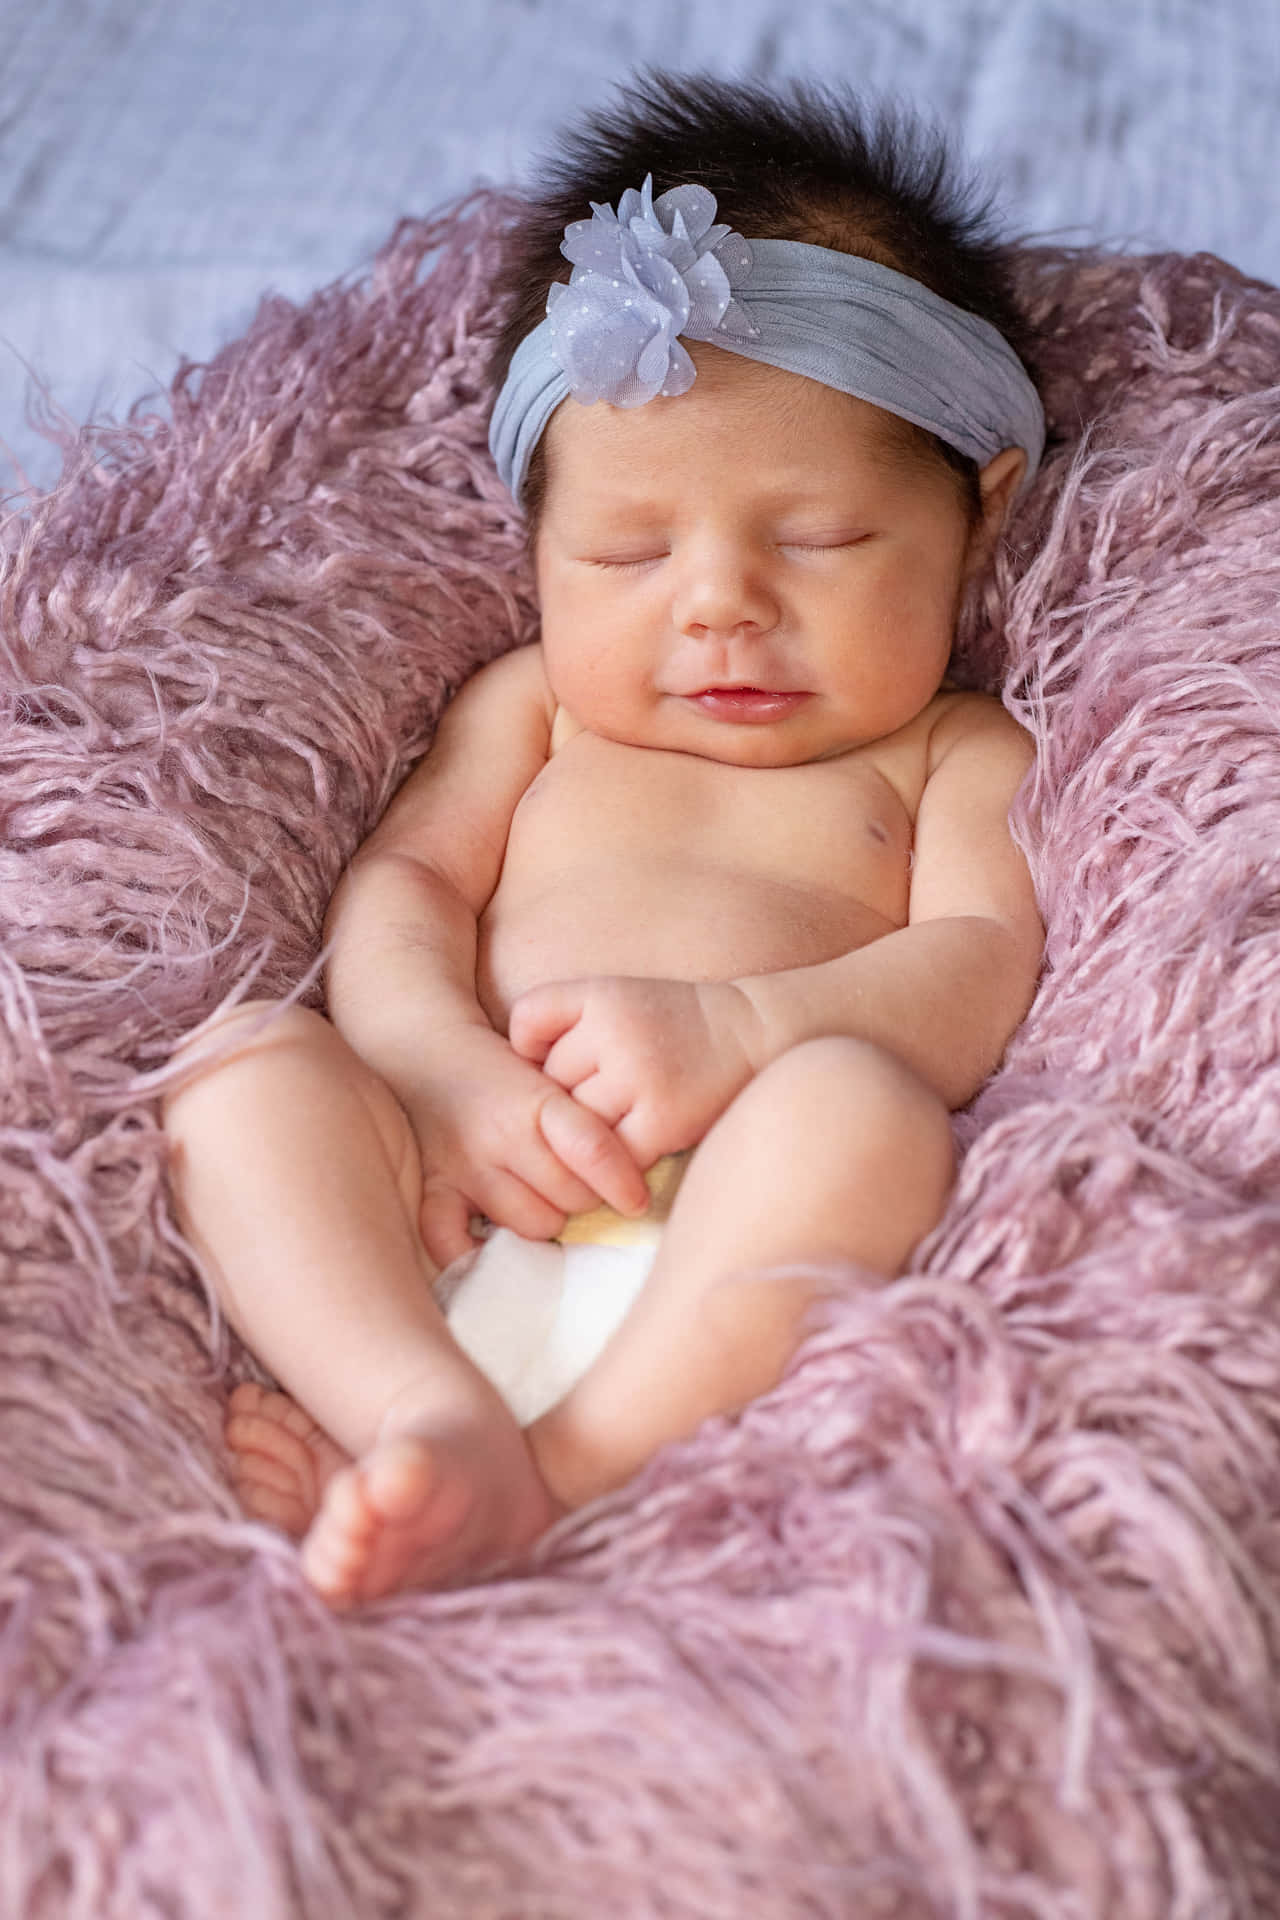 Adorable newborn baby sleeping peacefully